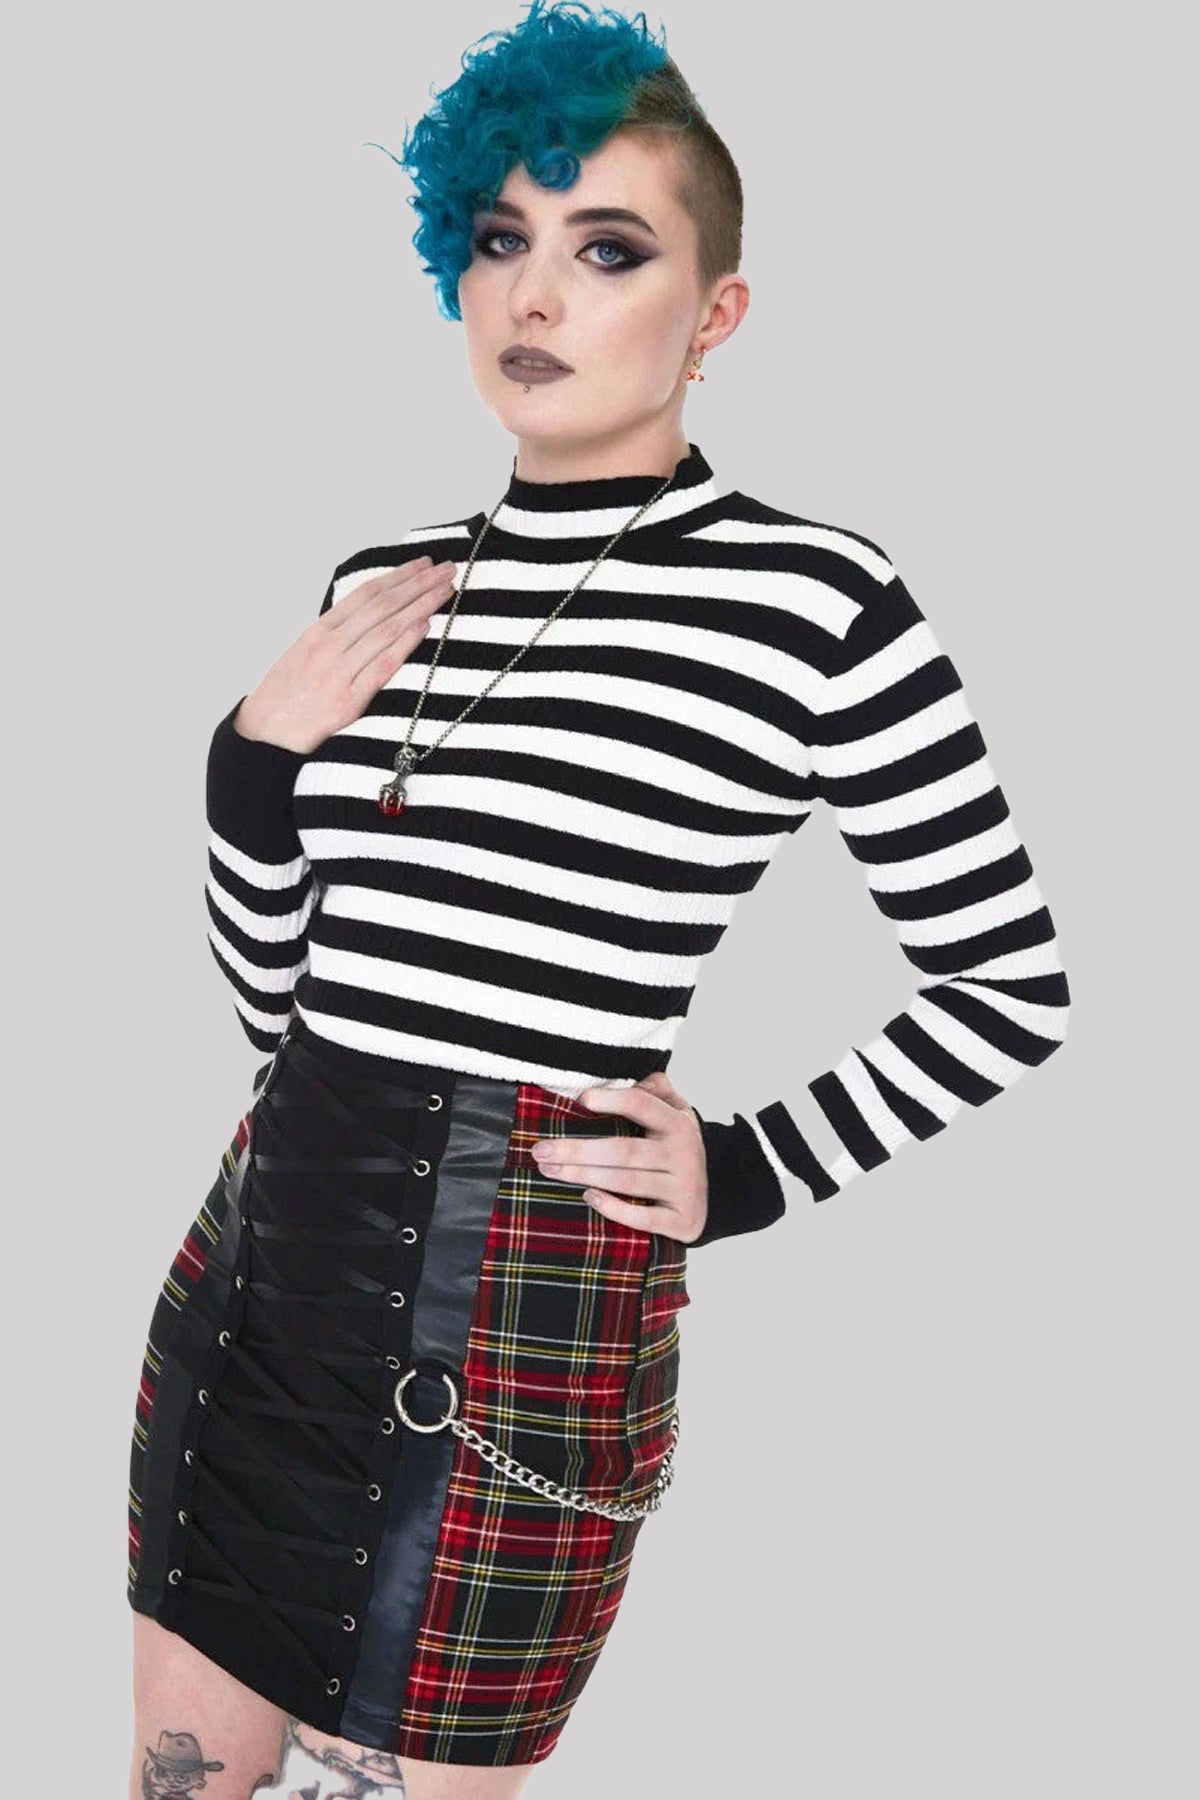 Jawbreaker Menace Stripe Ribbed Sweater Gothic Punk Jumper, Black & White